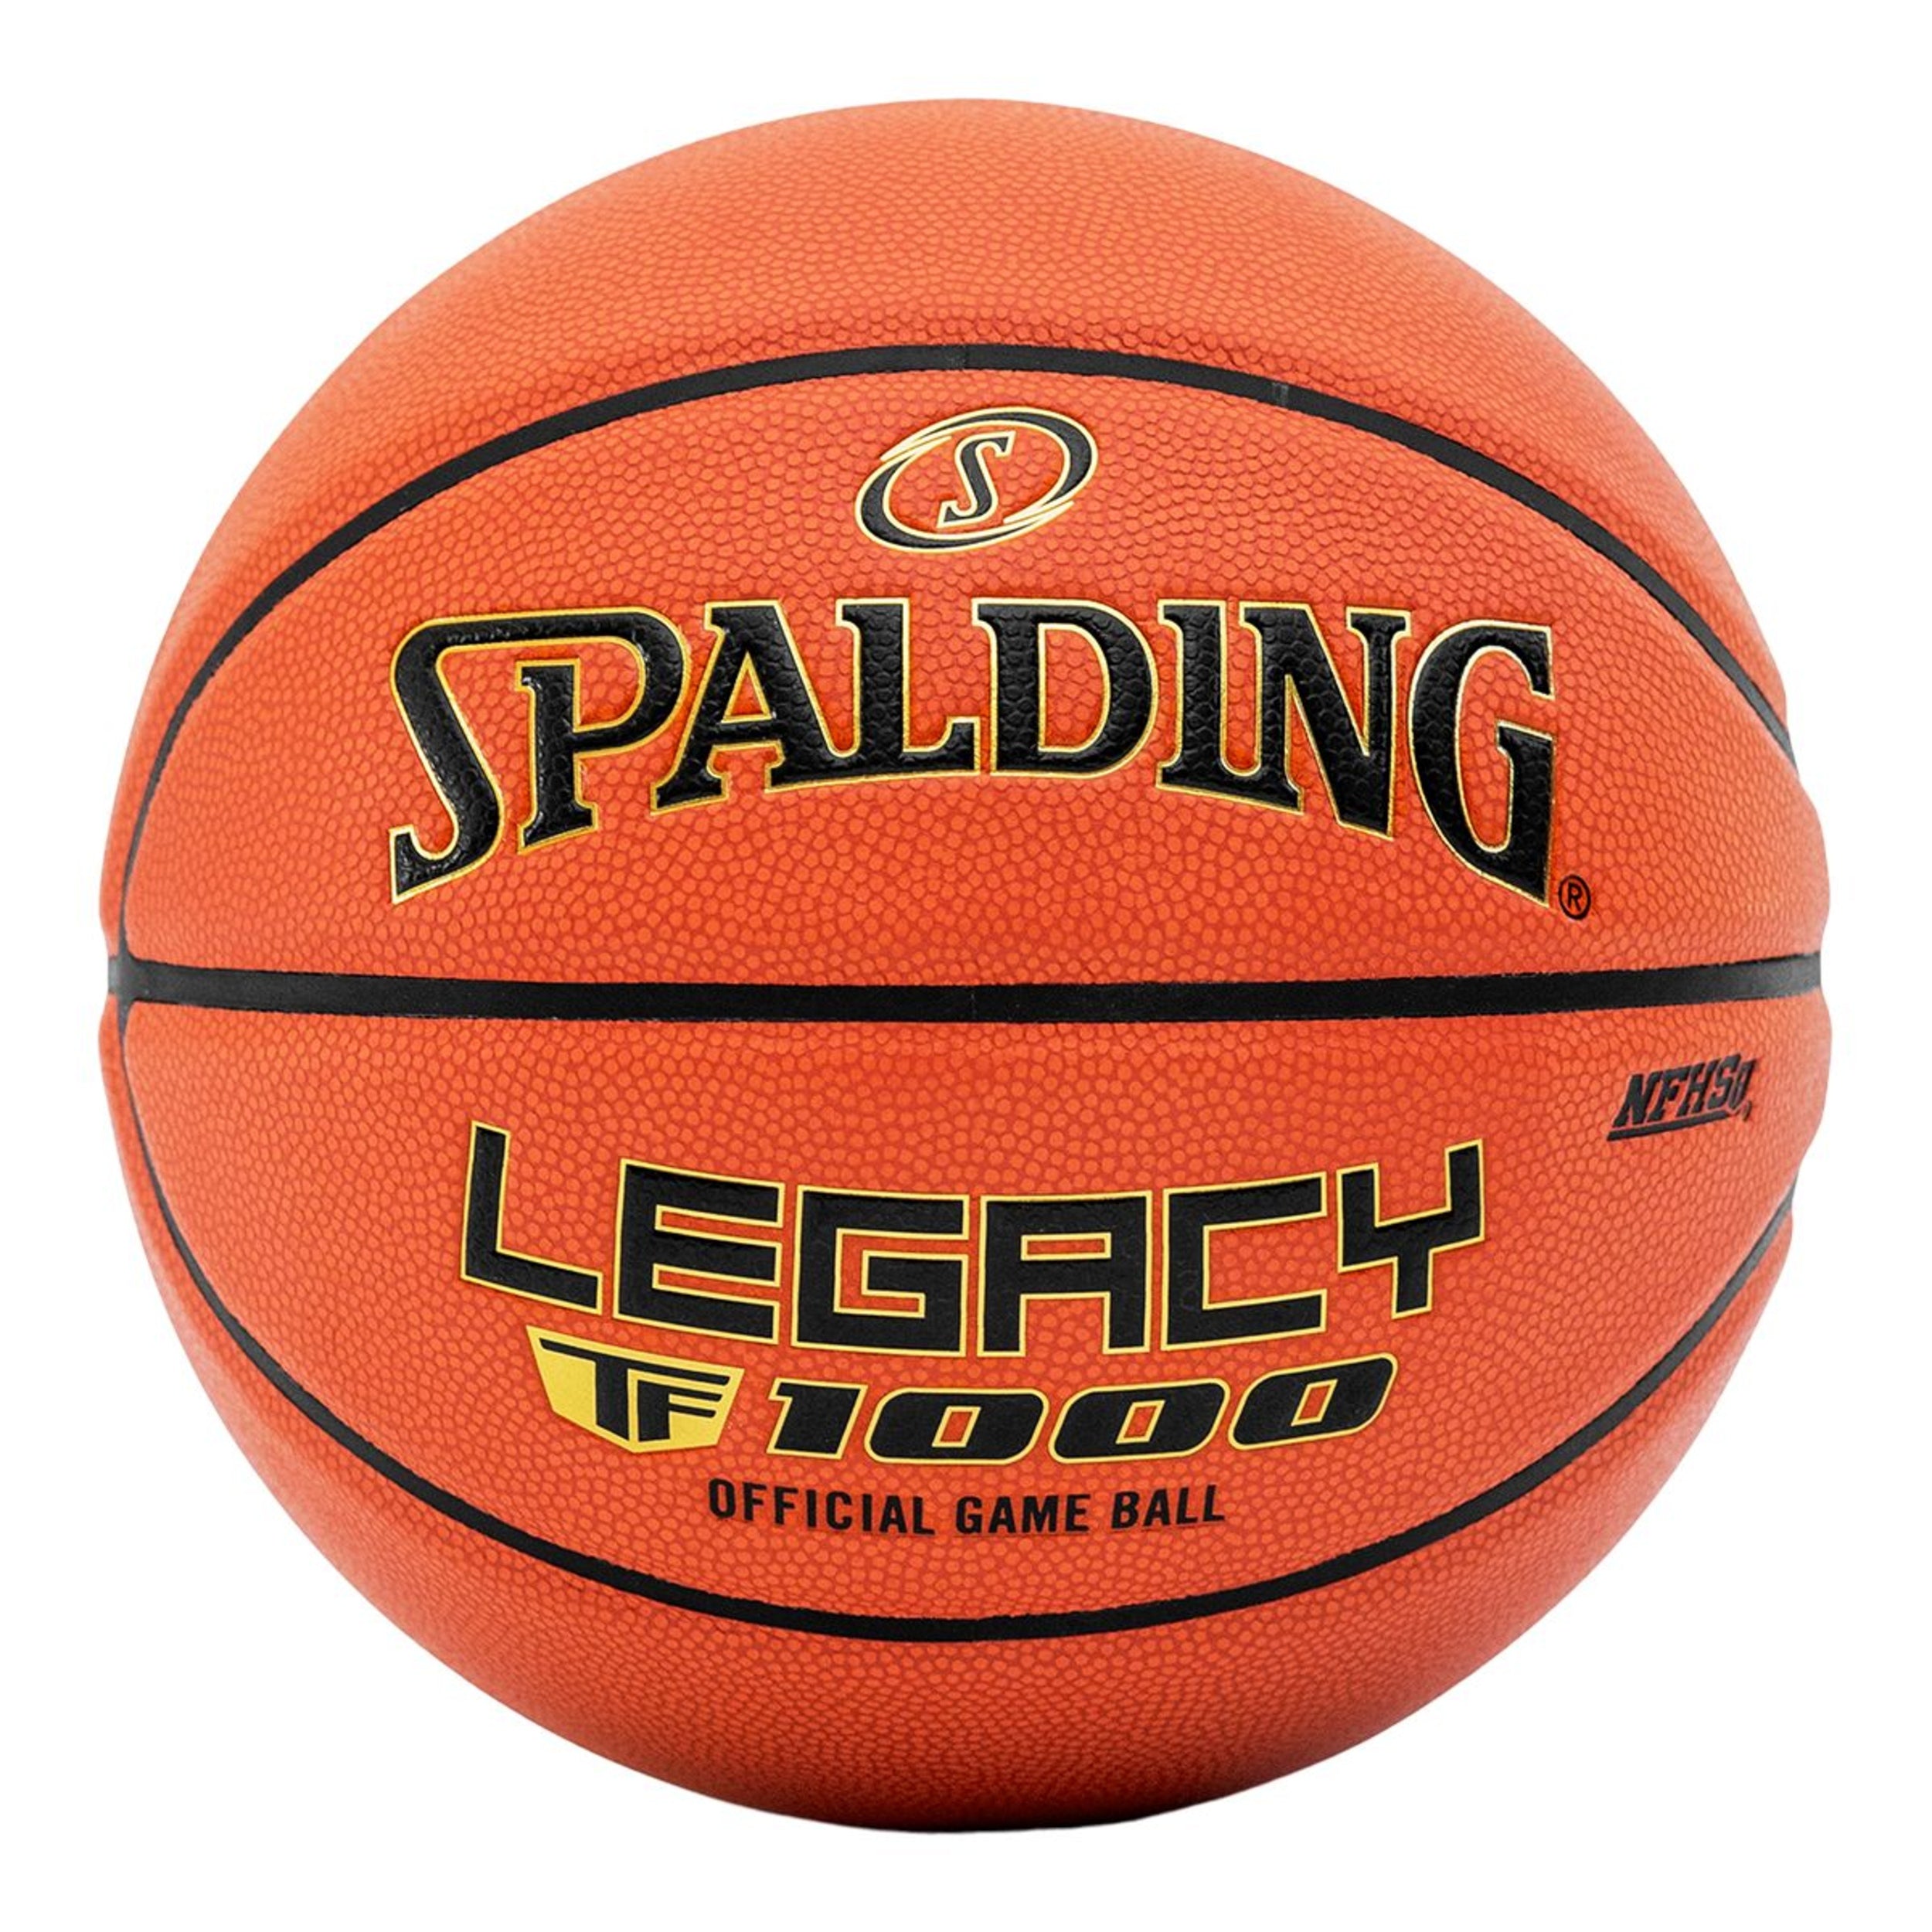 Spalding Legacy TF-1000 NFHS Indoor Basketball